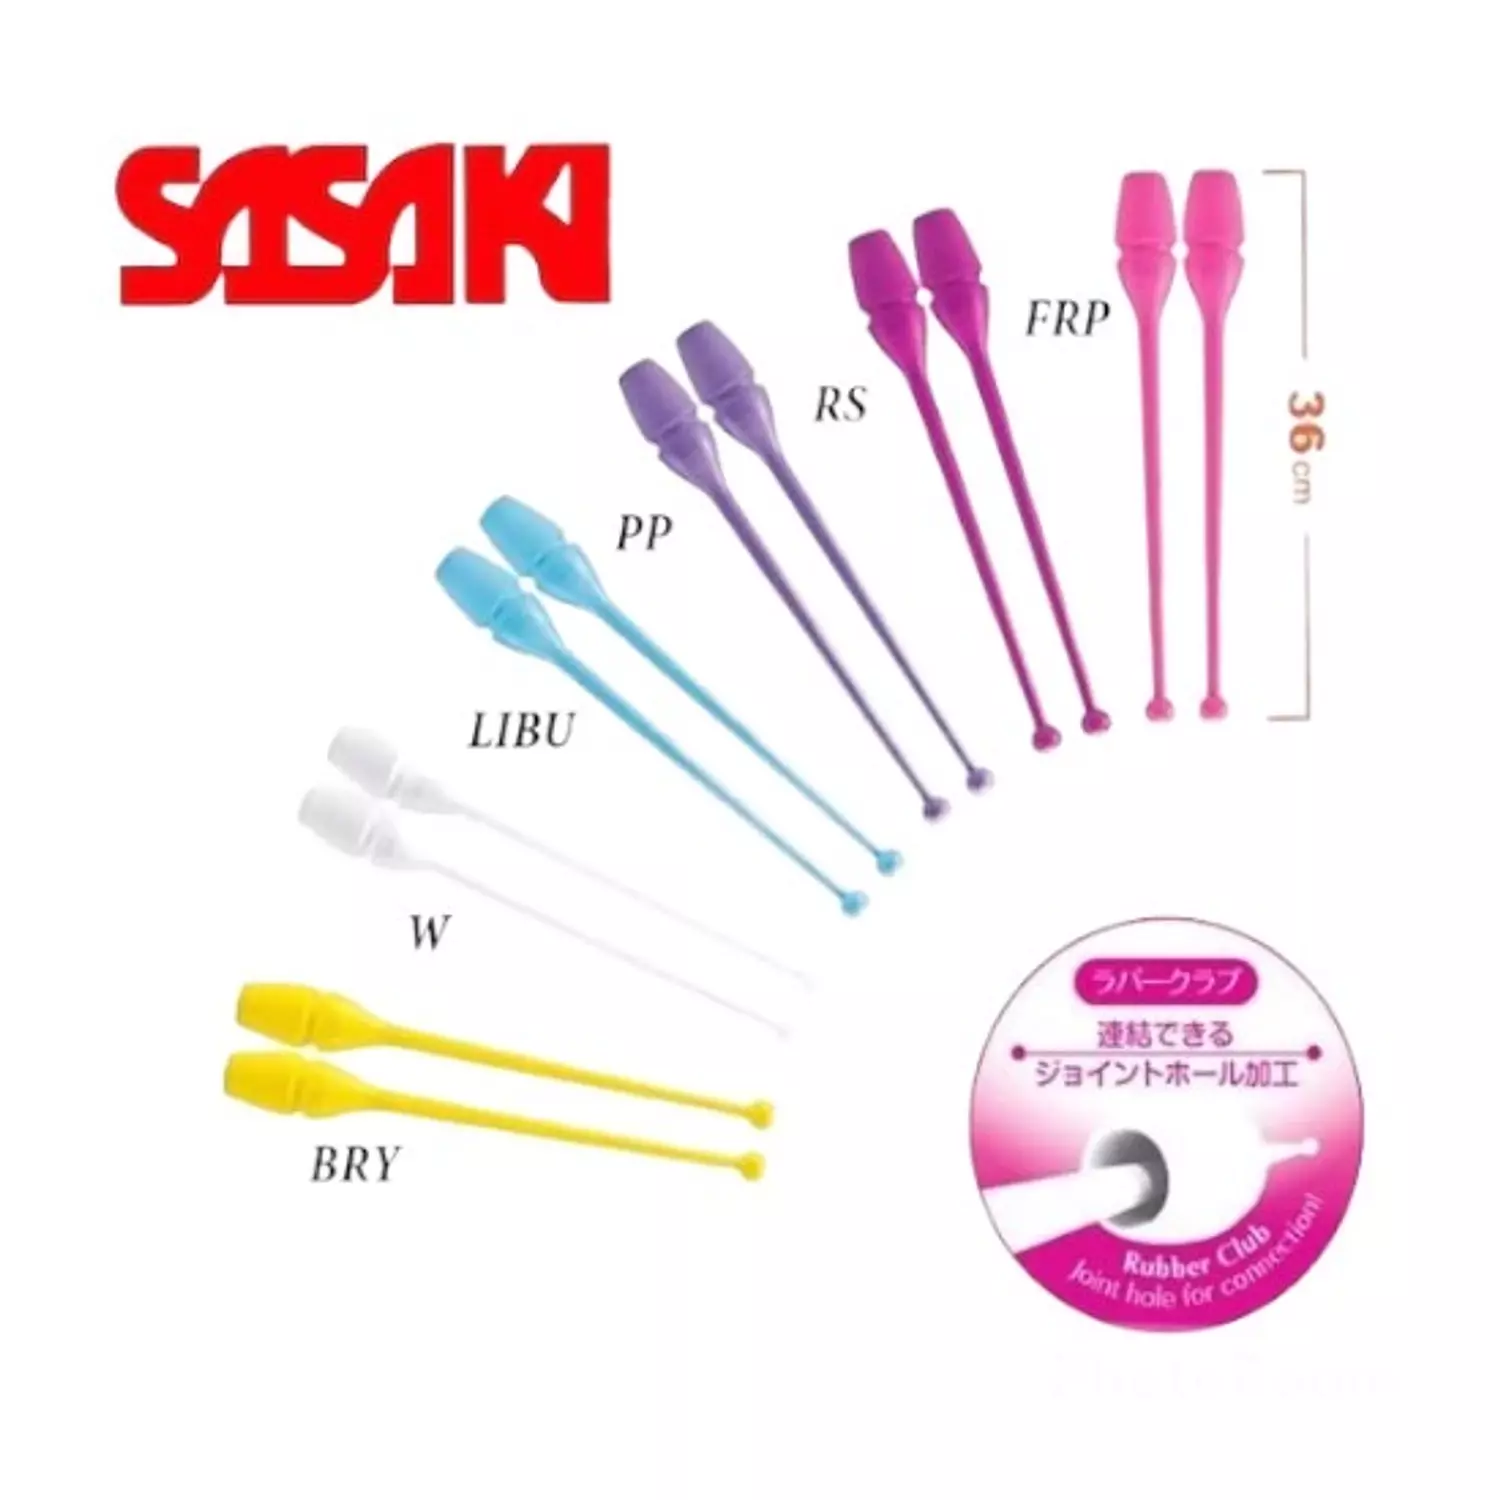 Sasaki-Rubber Clubs 36cm hover image